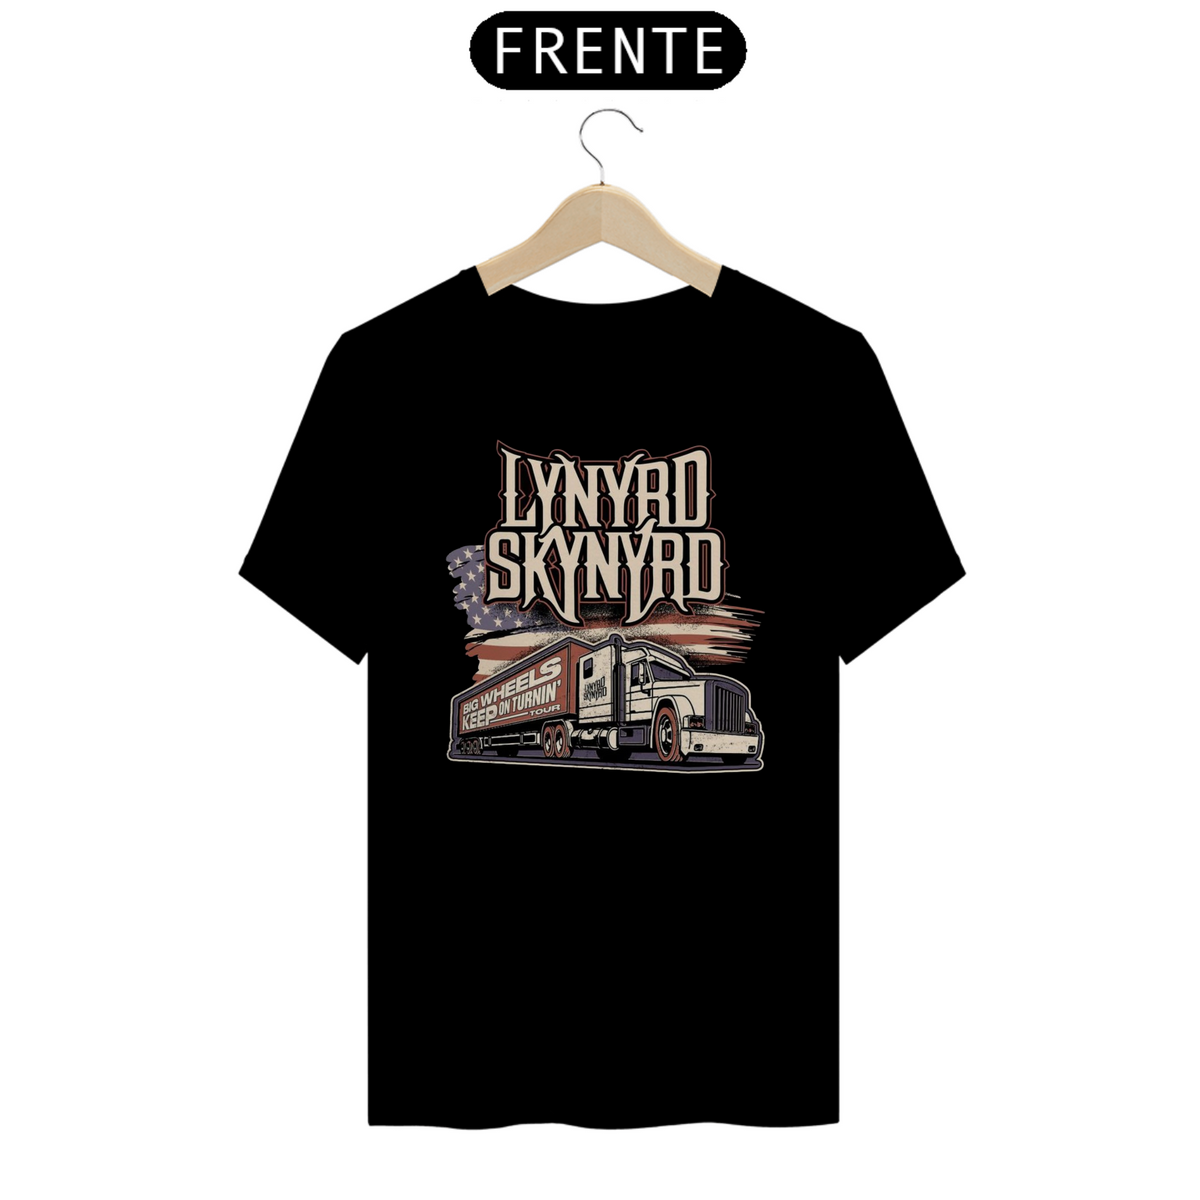 Nome do produto: Lynyrd Skynyrd